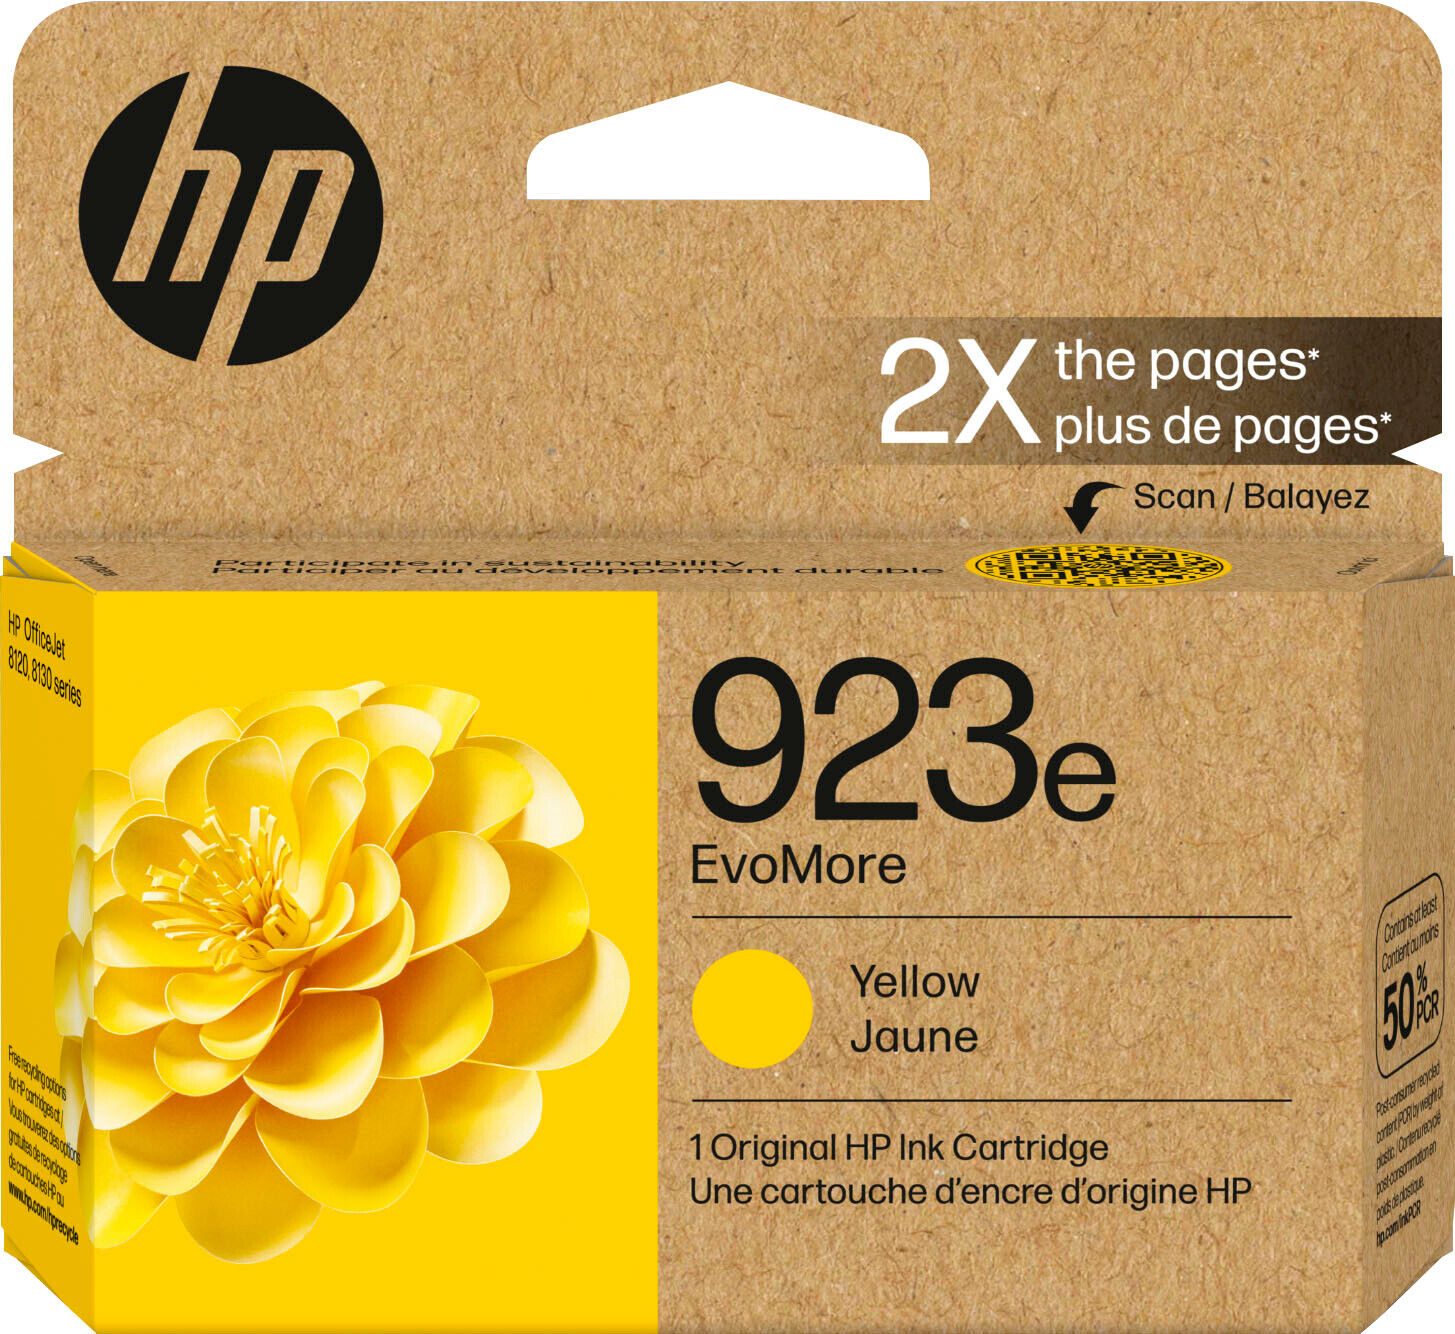 HP - 923e EvoMore Ink Cartridge - Yellow